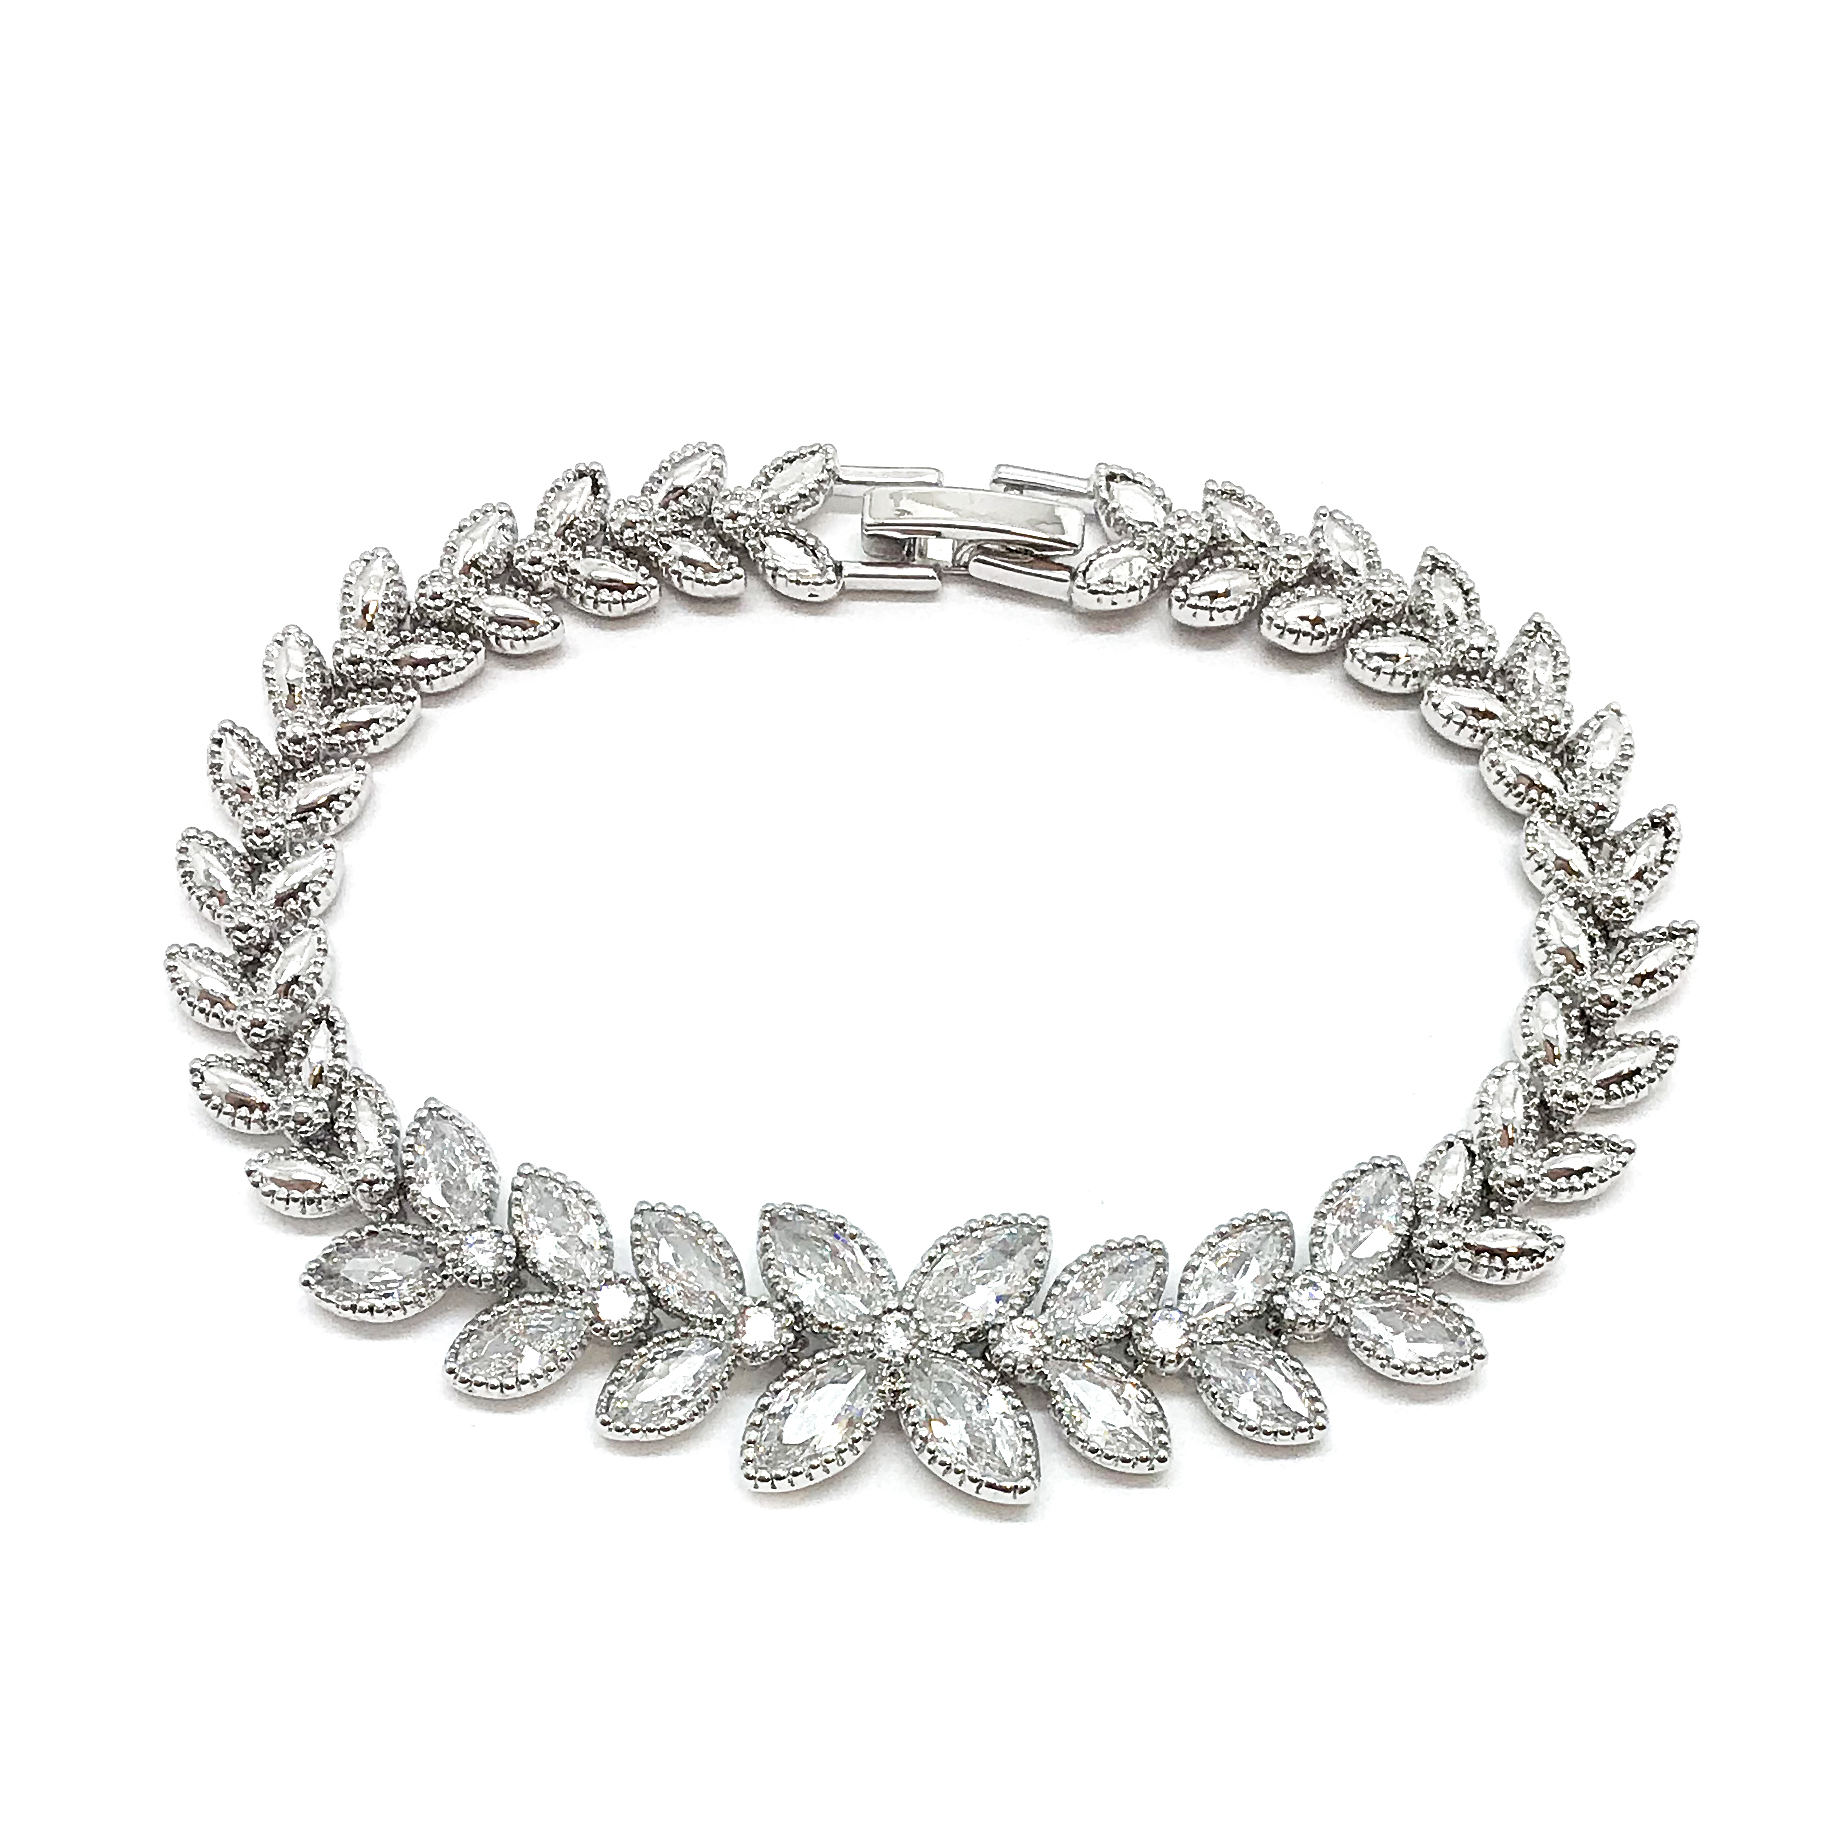 Wedding Bracelets for Bridesmaids|Emilia|Jeanette Maree|Shop Online